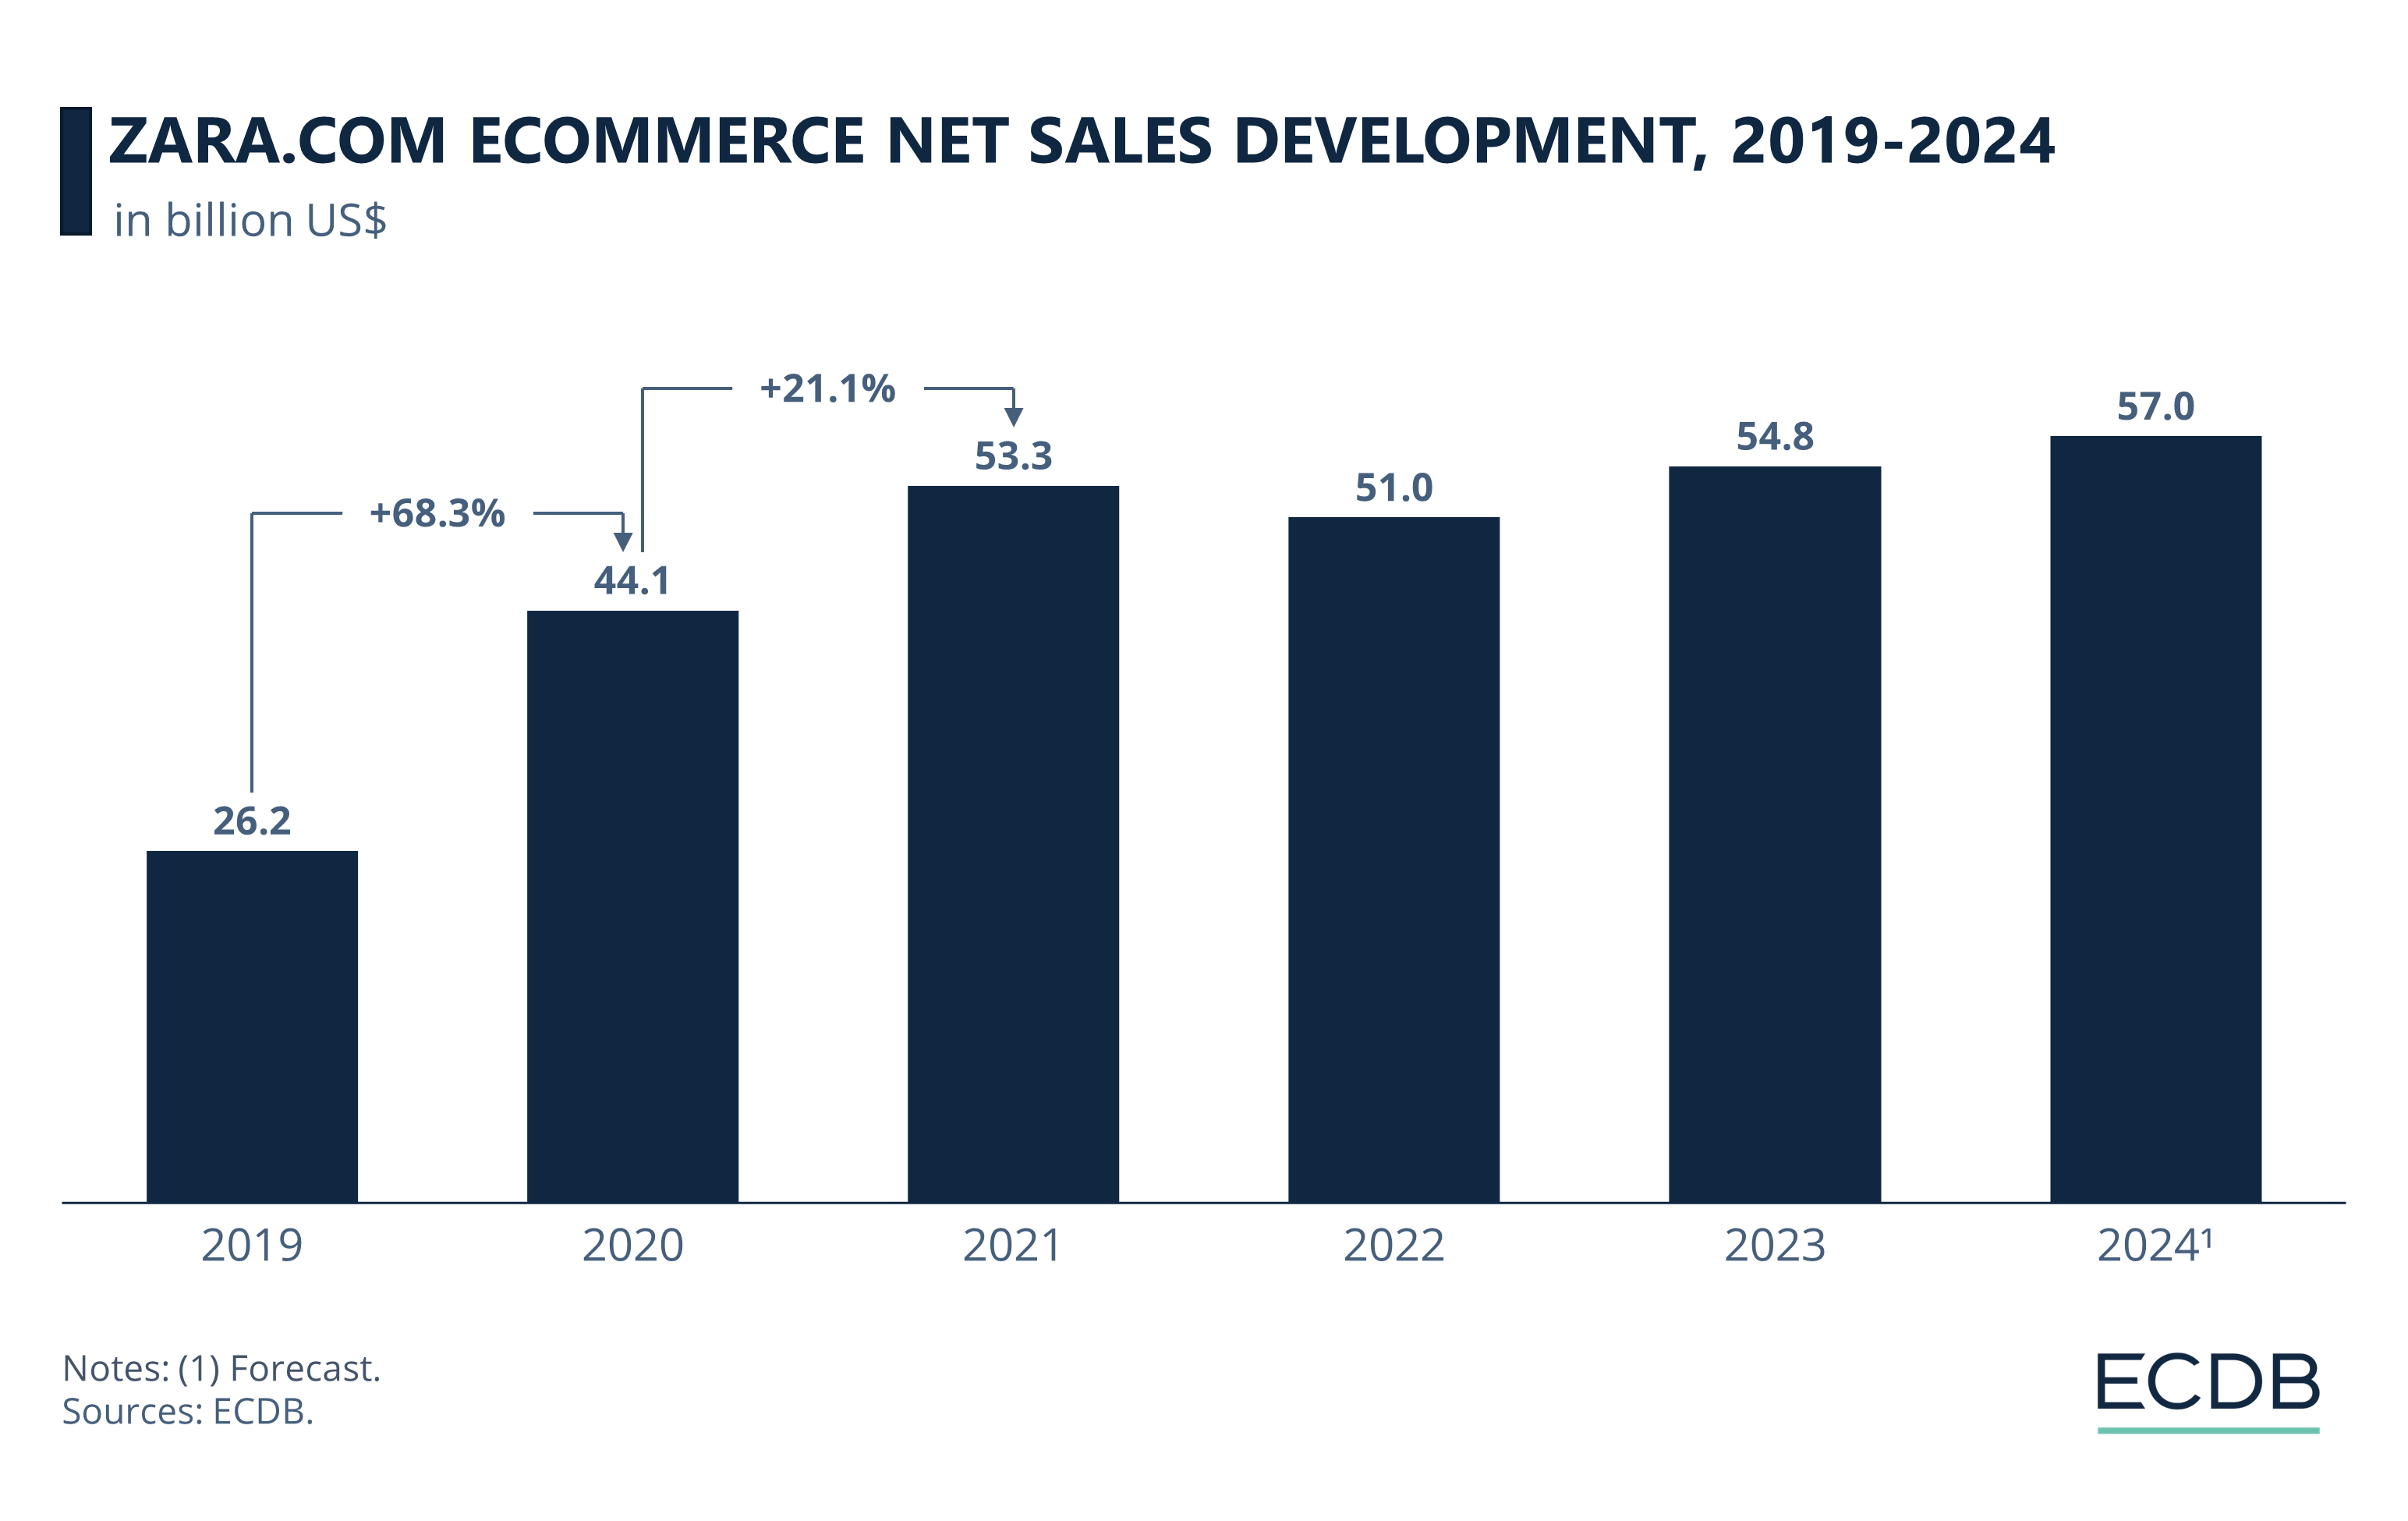 Zara.com eCommerce Net Sales Development, 2019-2024